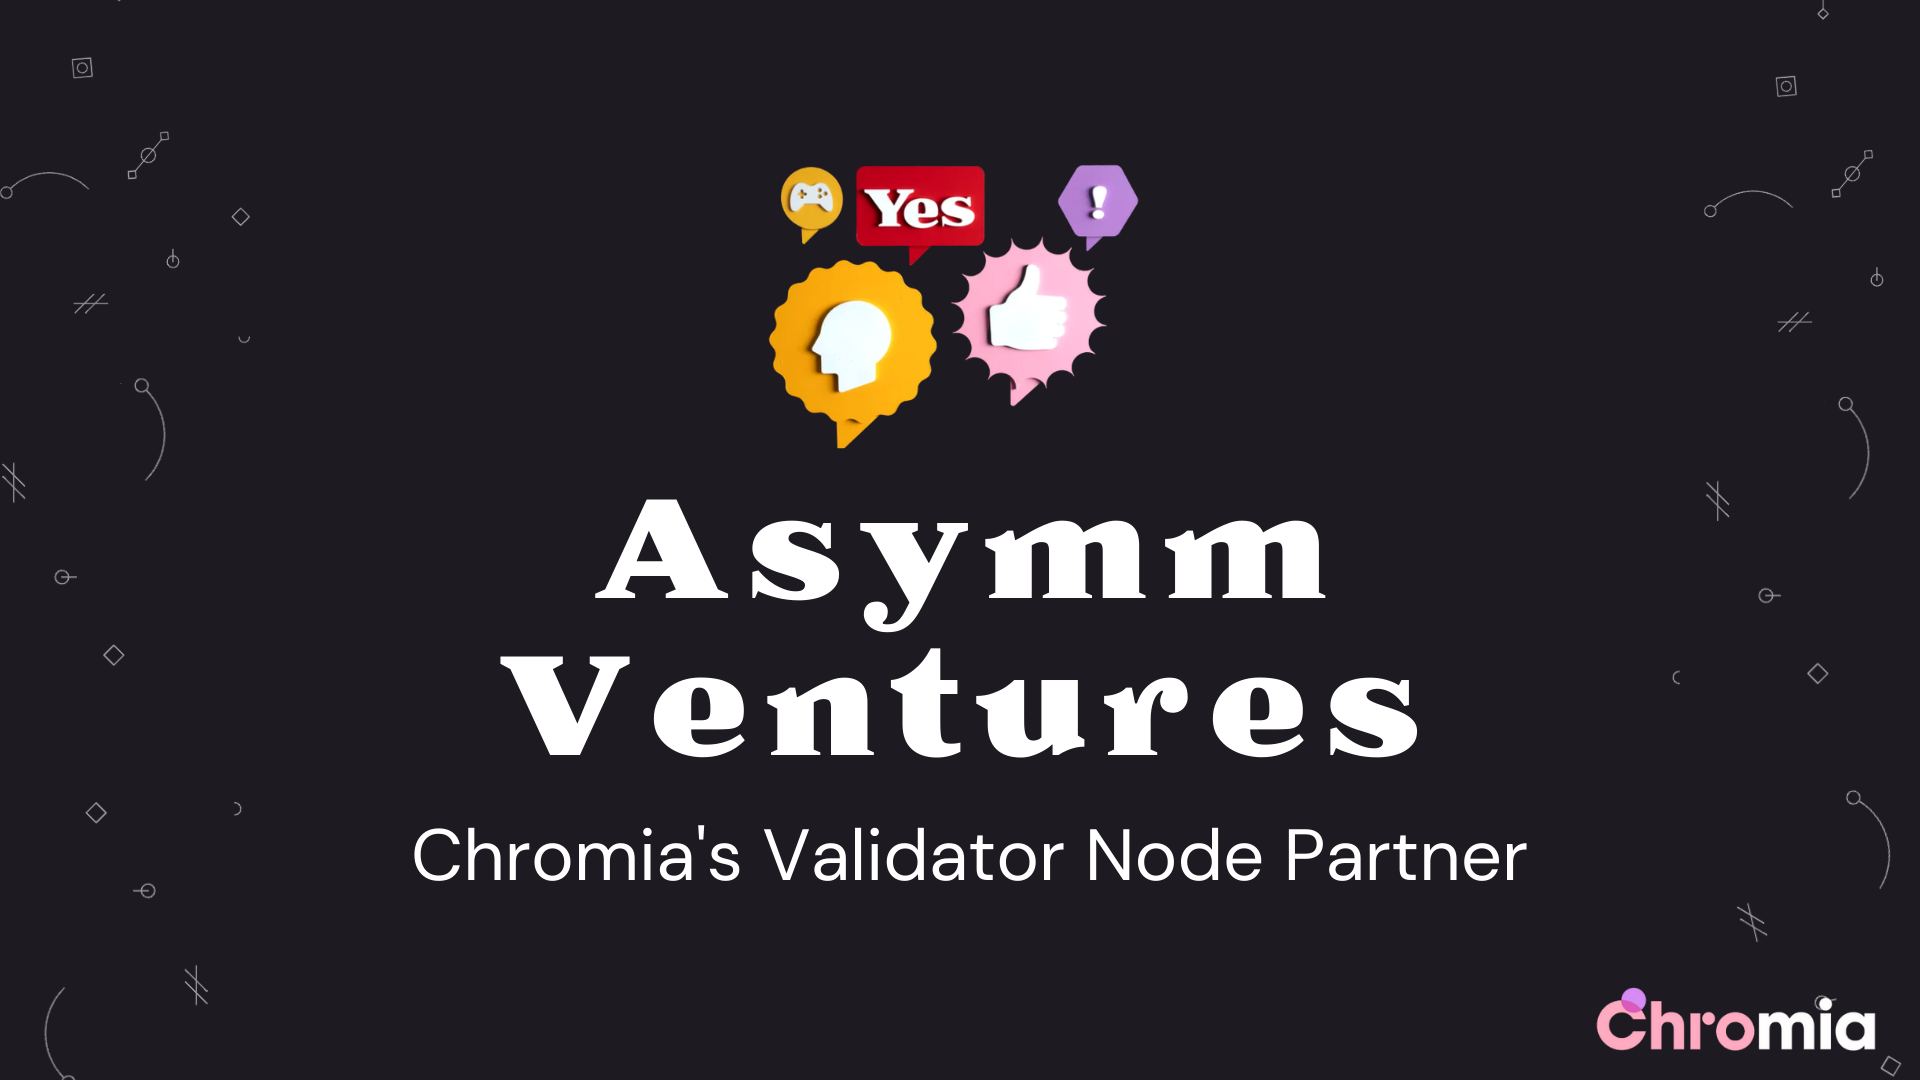 Introducing Chromia Validator Node Partner: Asymm Ventures